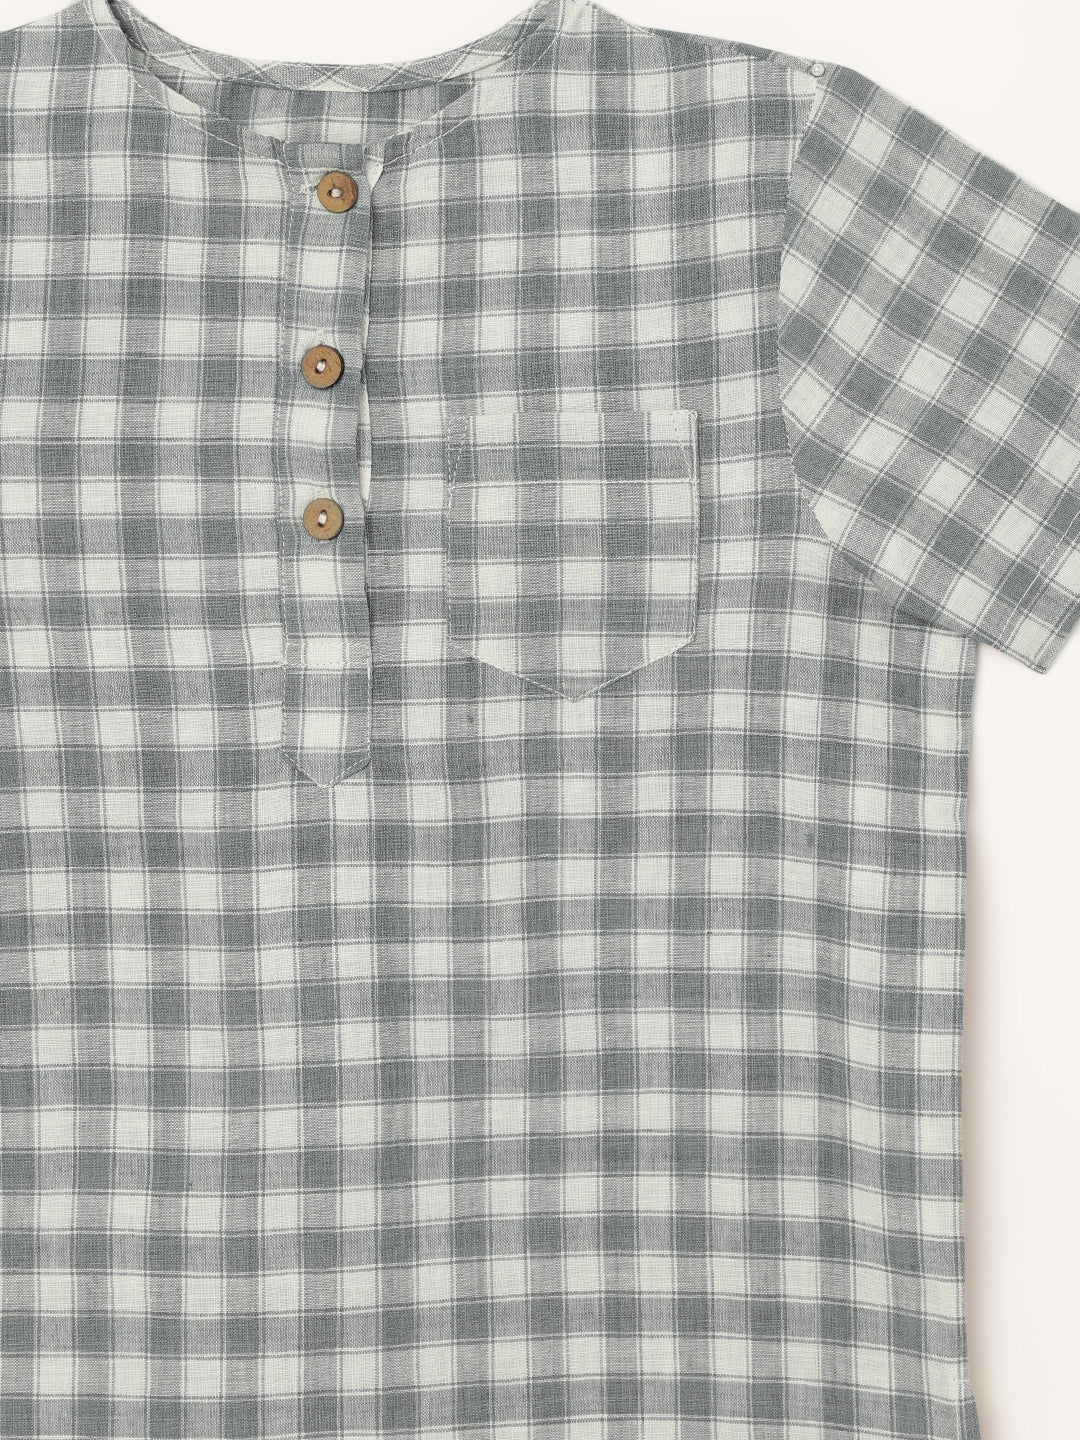 Boys Handloom Cotton Grey Checks Half Sleeves Shirt 1 yr to 8 yrs - Close-up